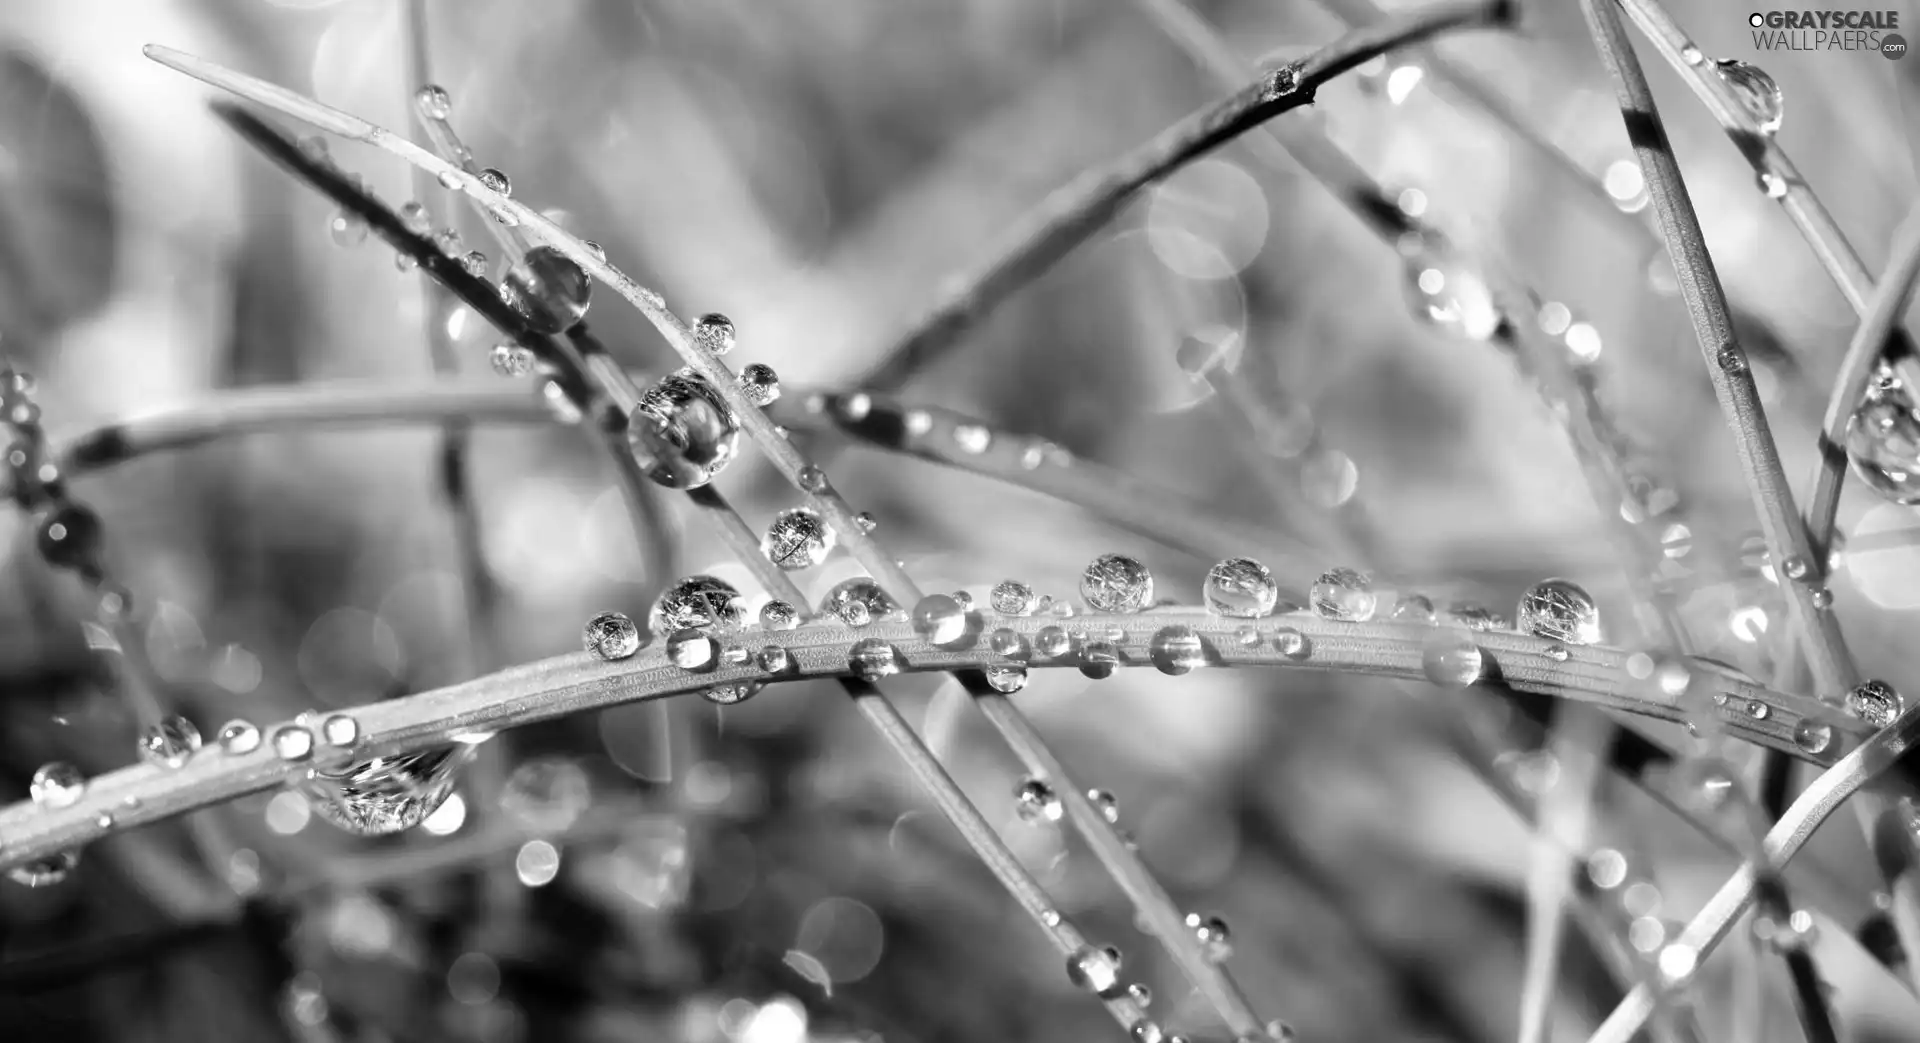 stems, droplets